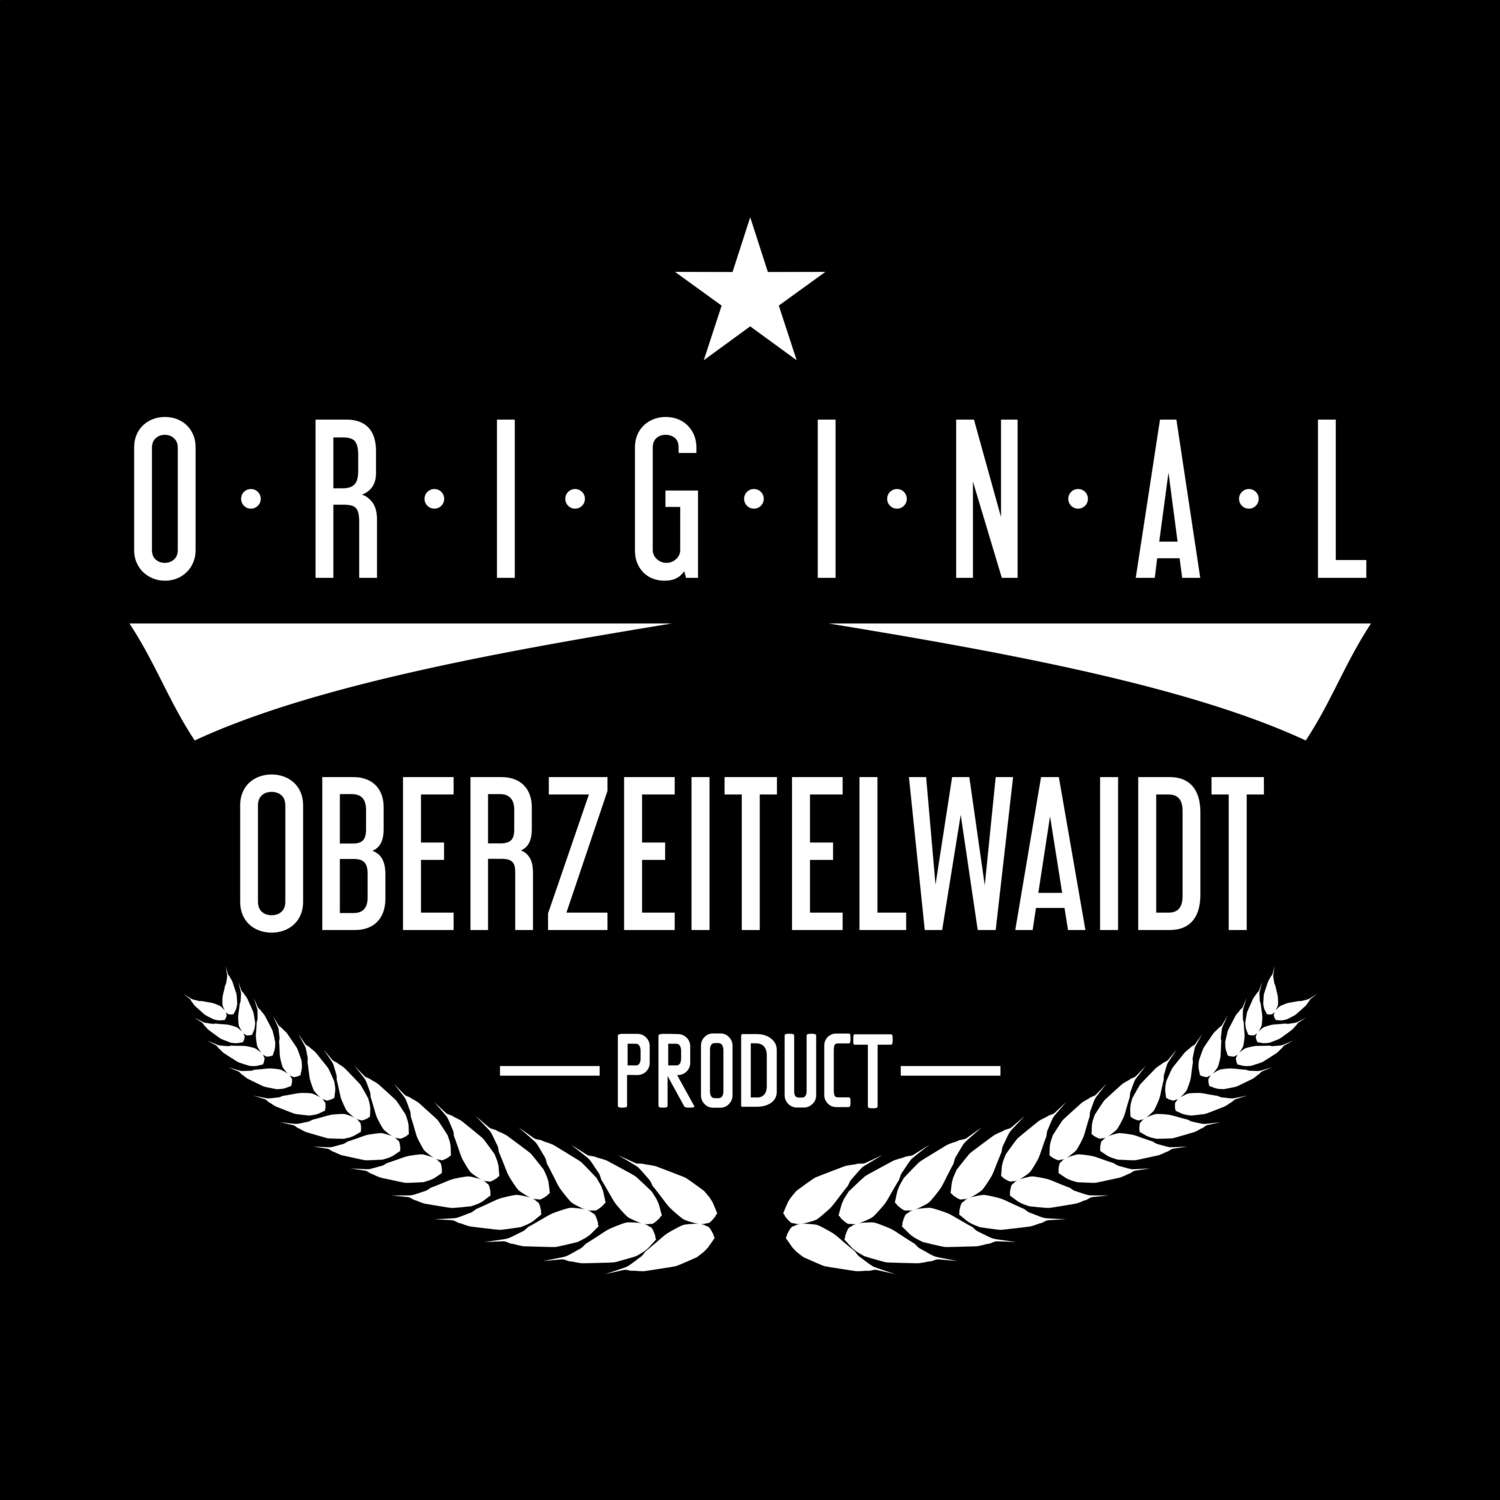 Oberzeitelwaidt T-Shirt »Original Product«